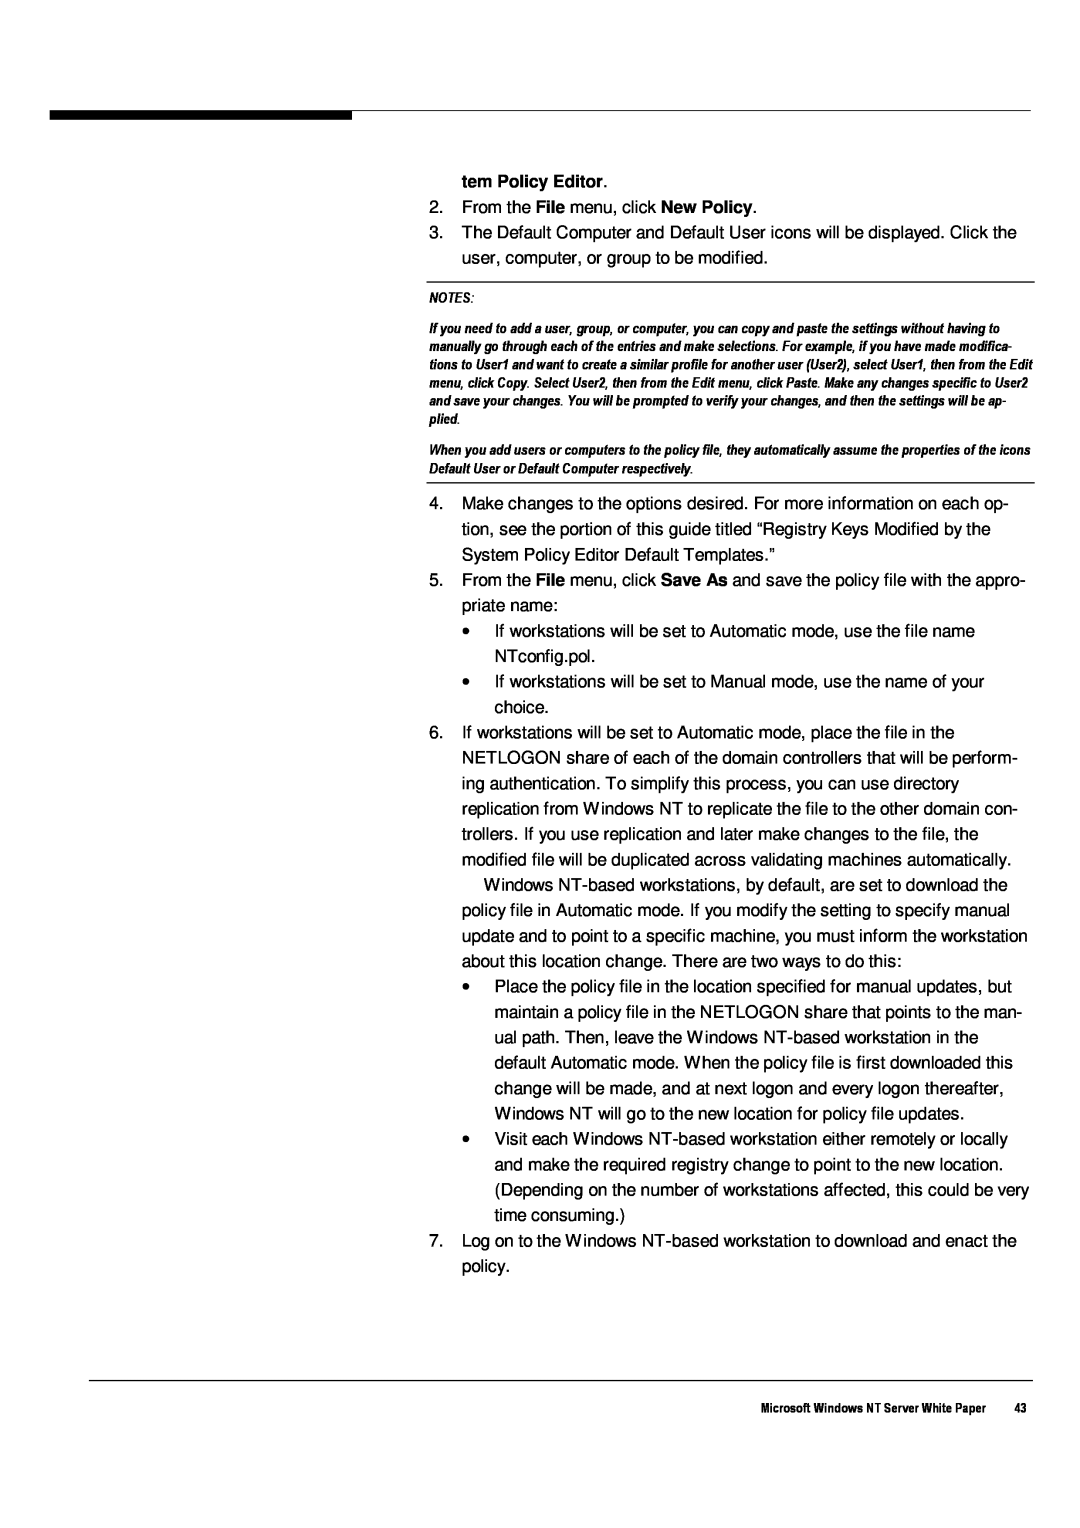 Microsoft Windows NT 4.0 manual tem Policy Editor 